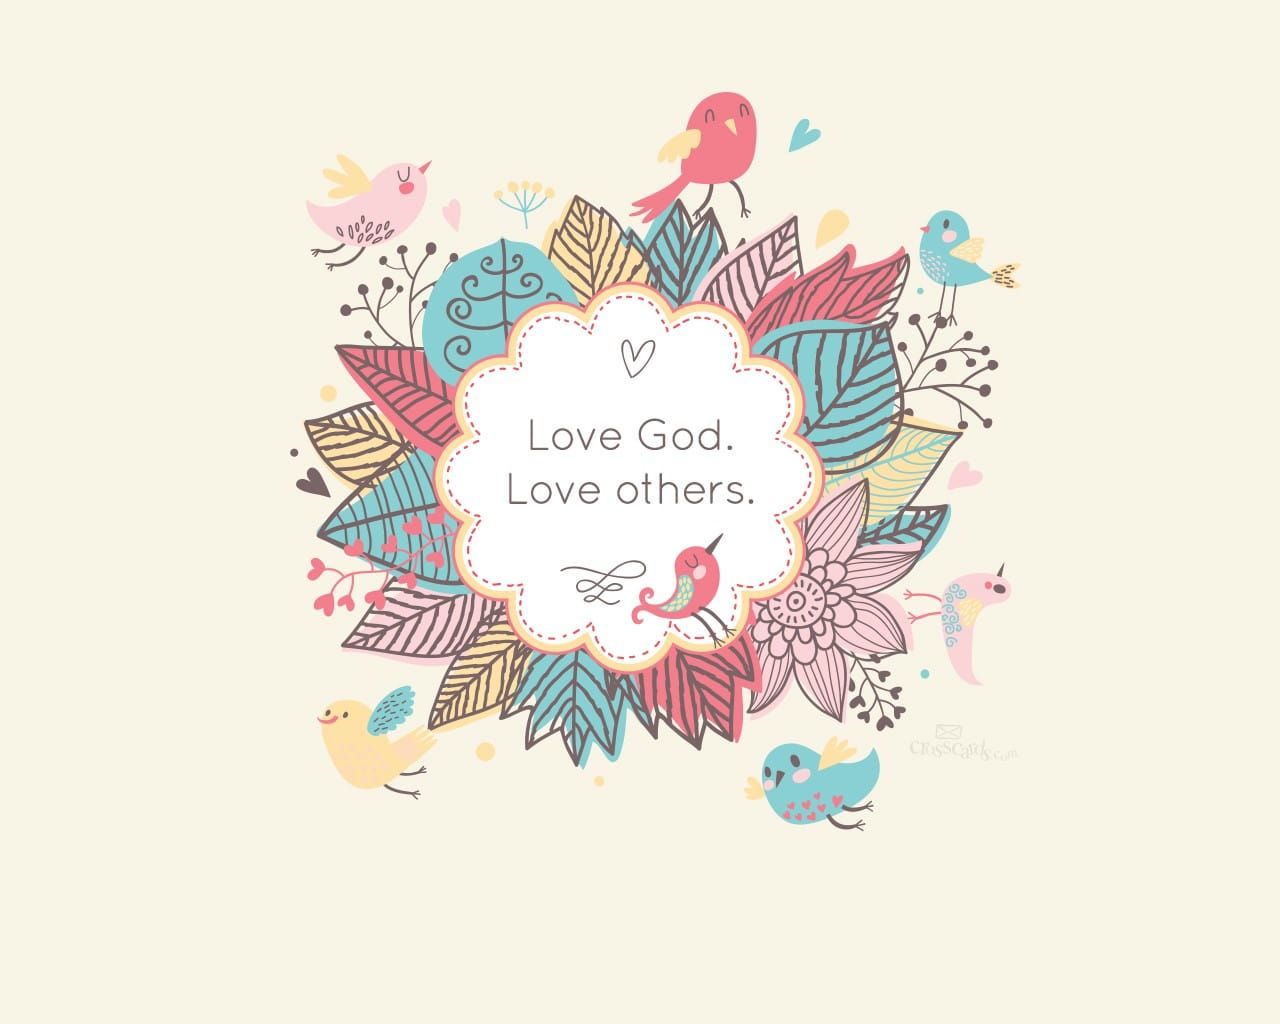 Love God. Love others. Wallpapercrosscards.com